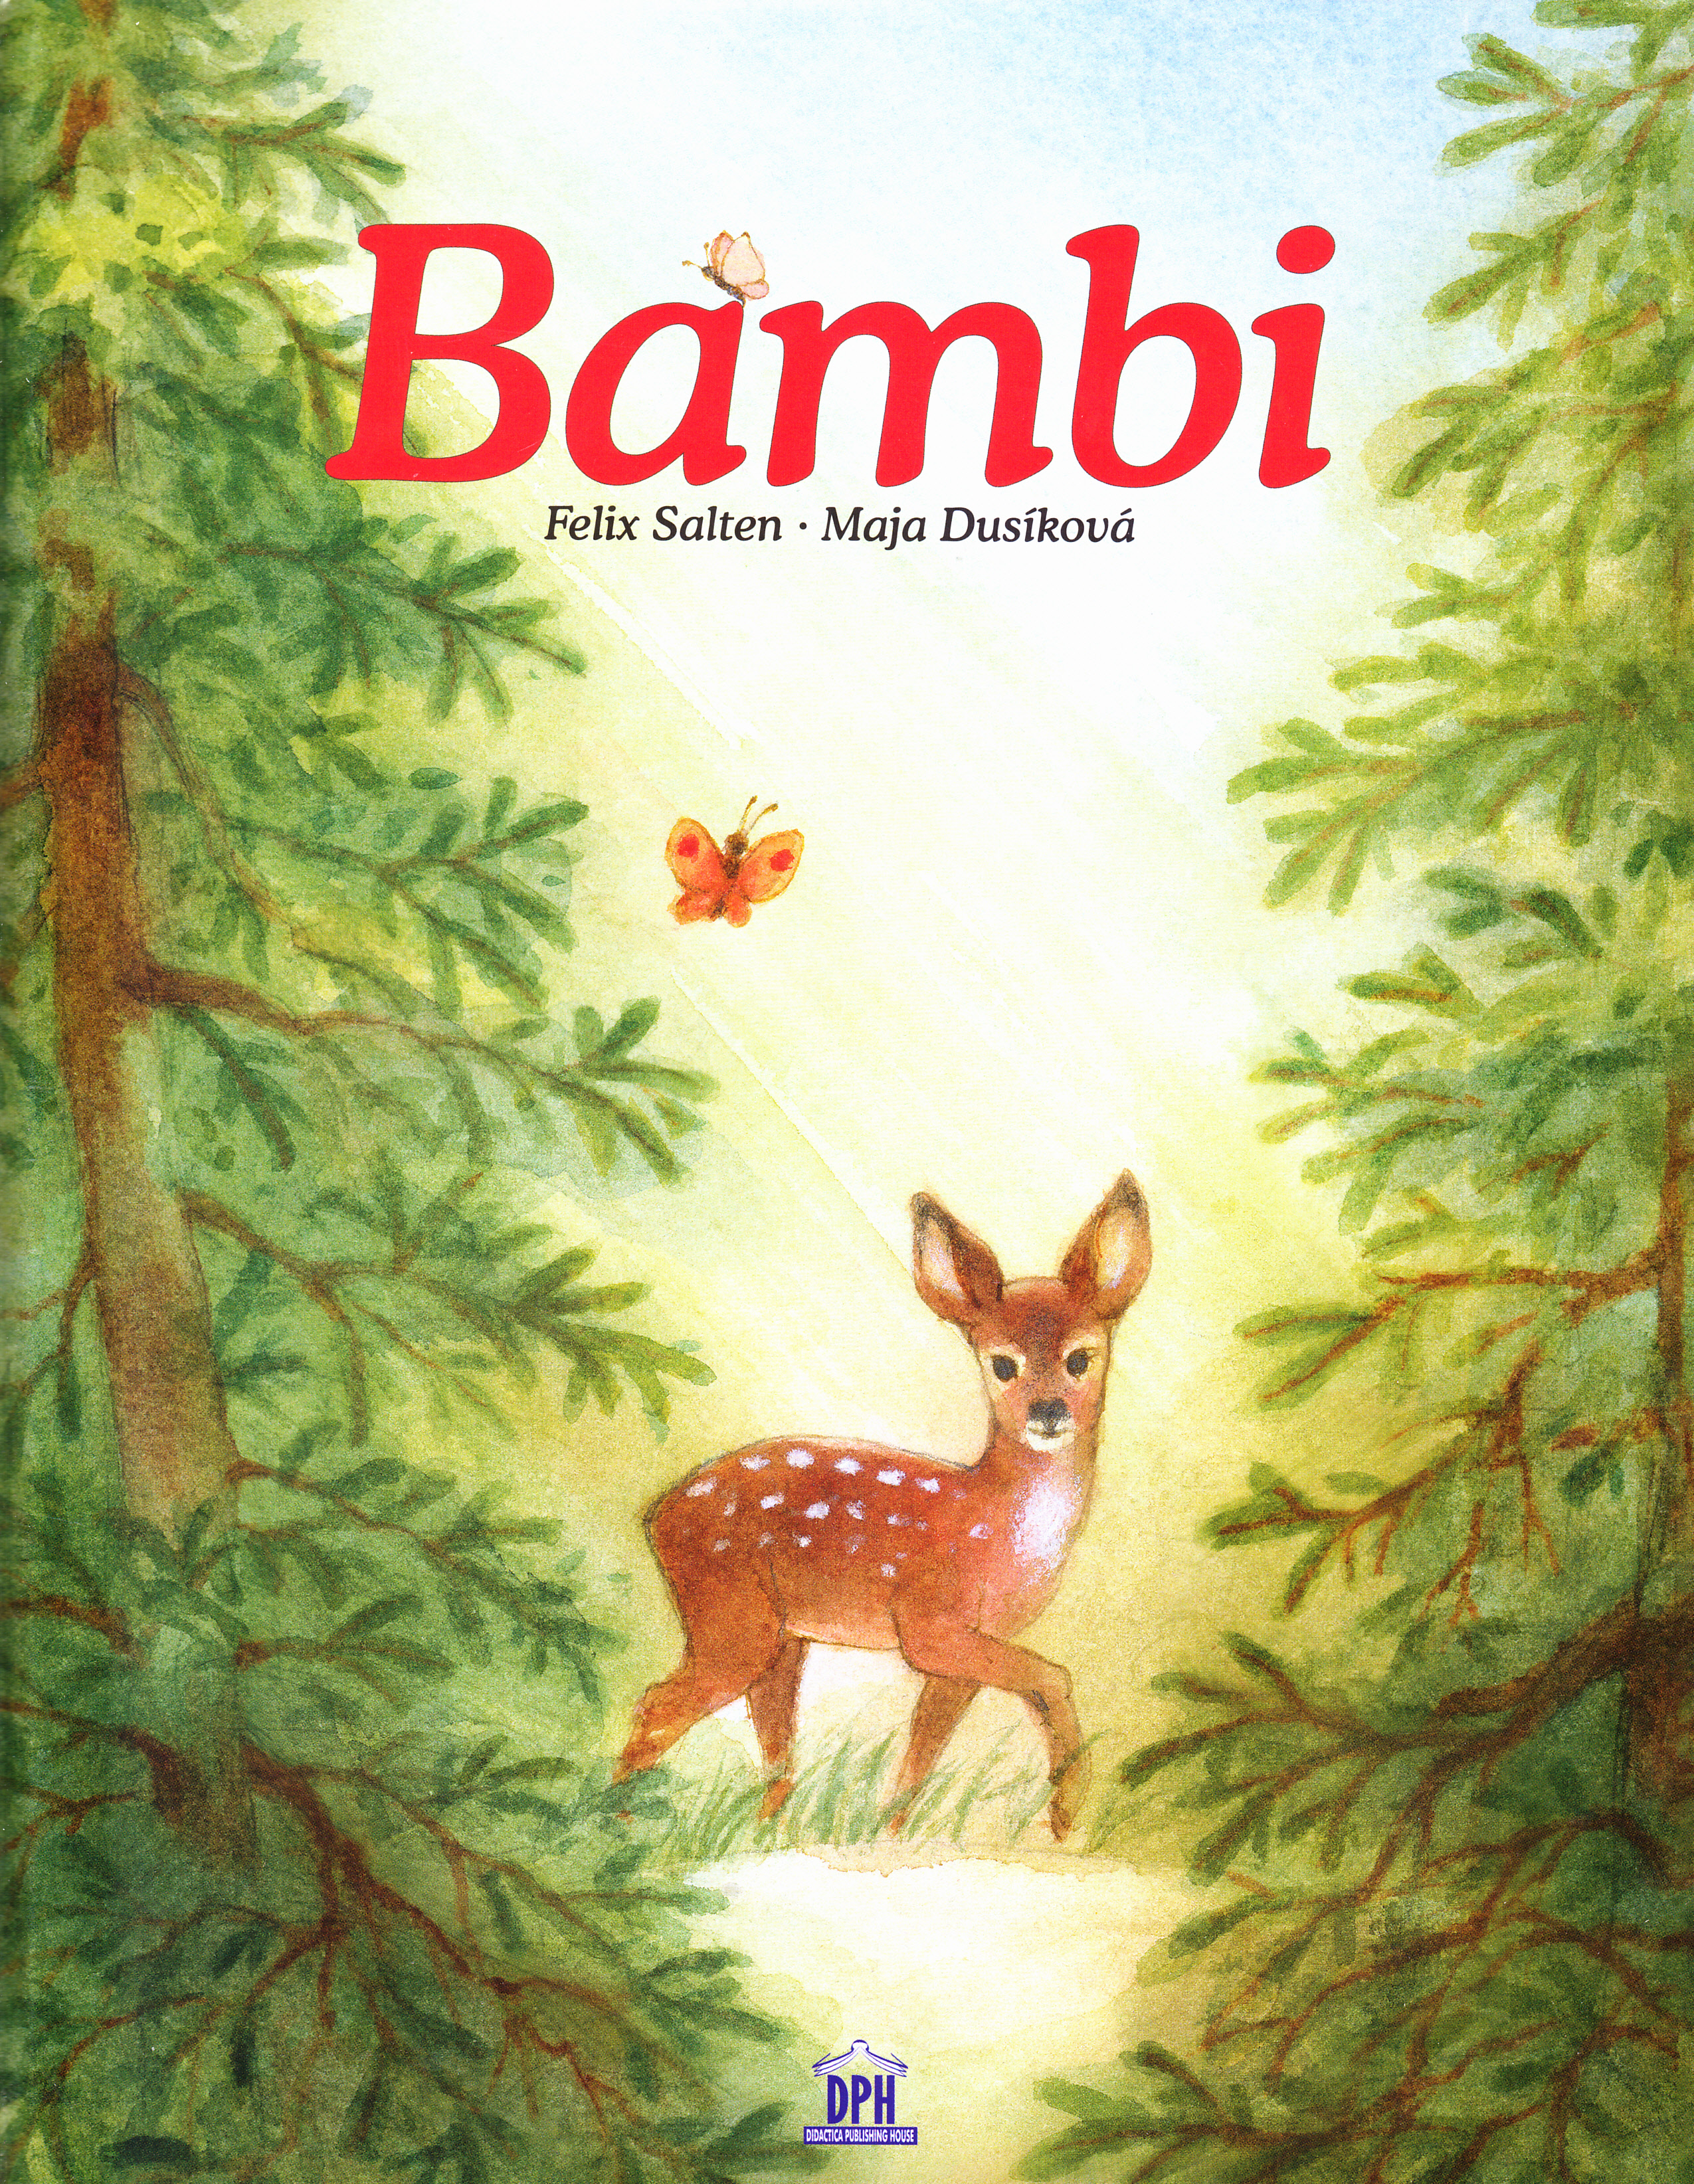 Bambi - Felix Salten, Maja Dusikova